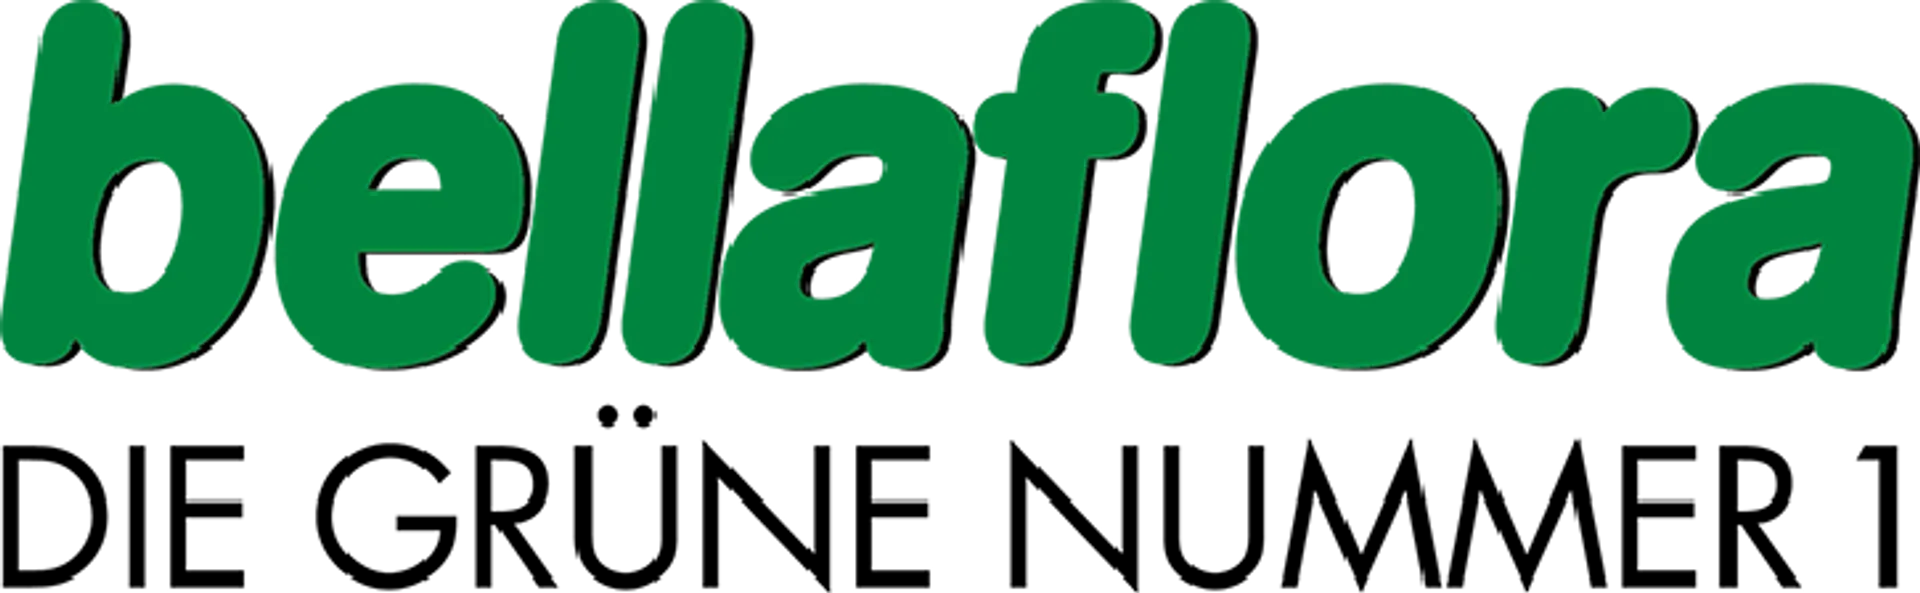 BELLAFLORA logo die aktuell Flugblatt